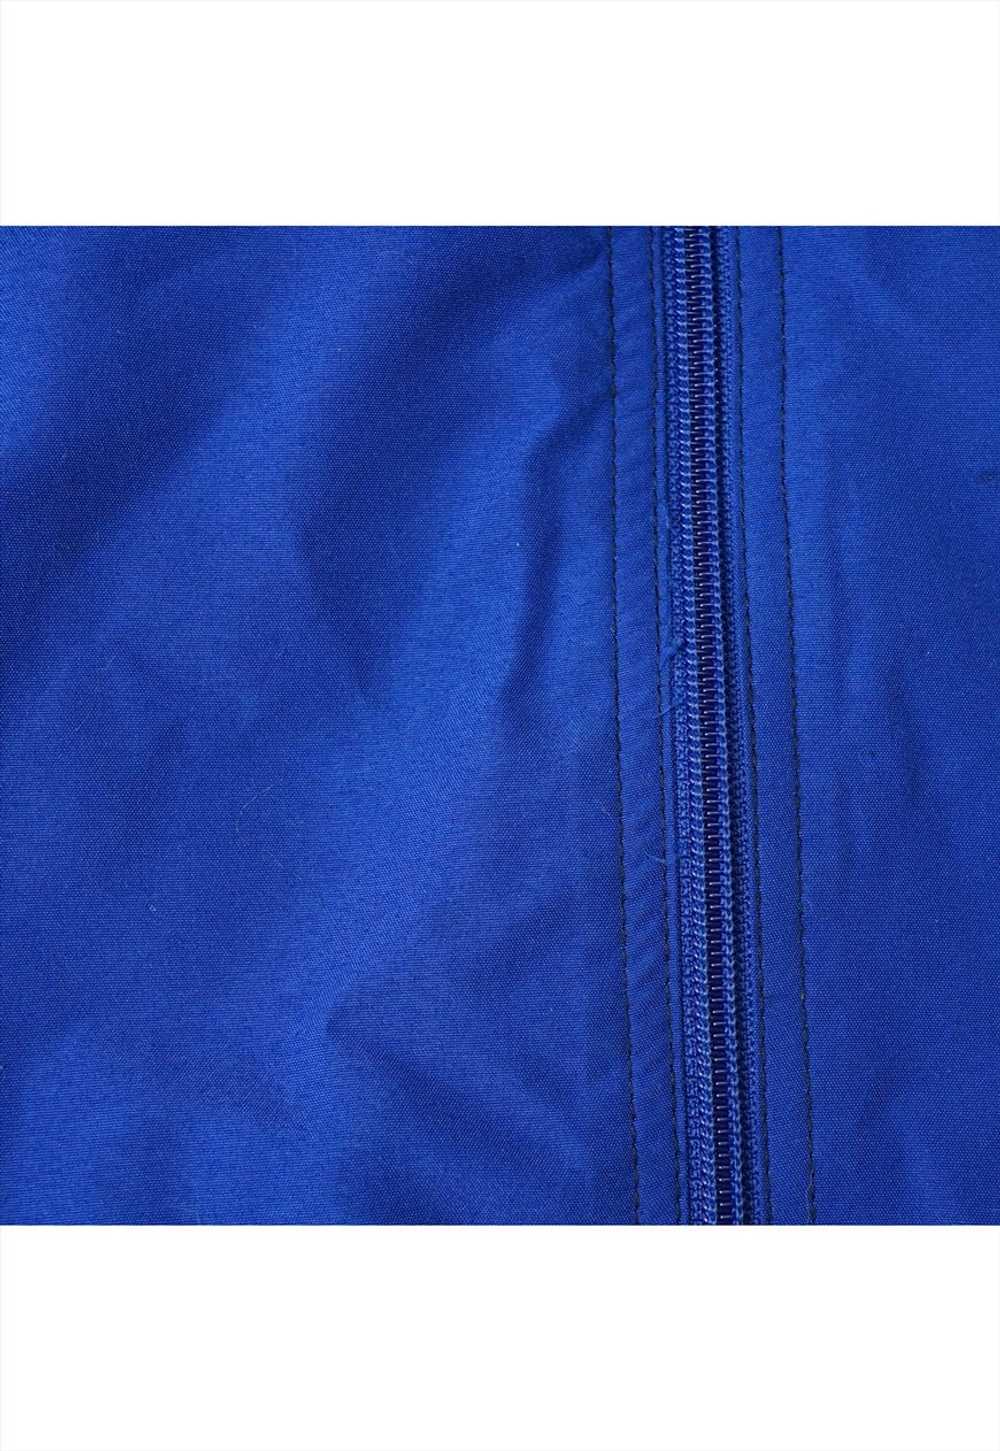 Vintage Erima Blue Windbreaker Jacket Womens - image 4